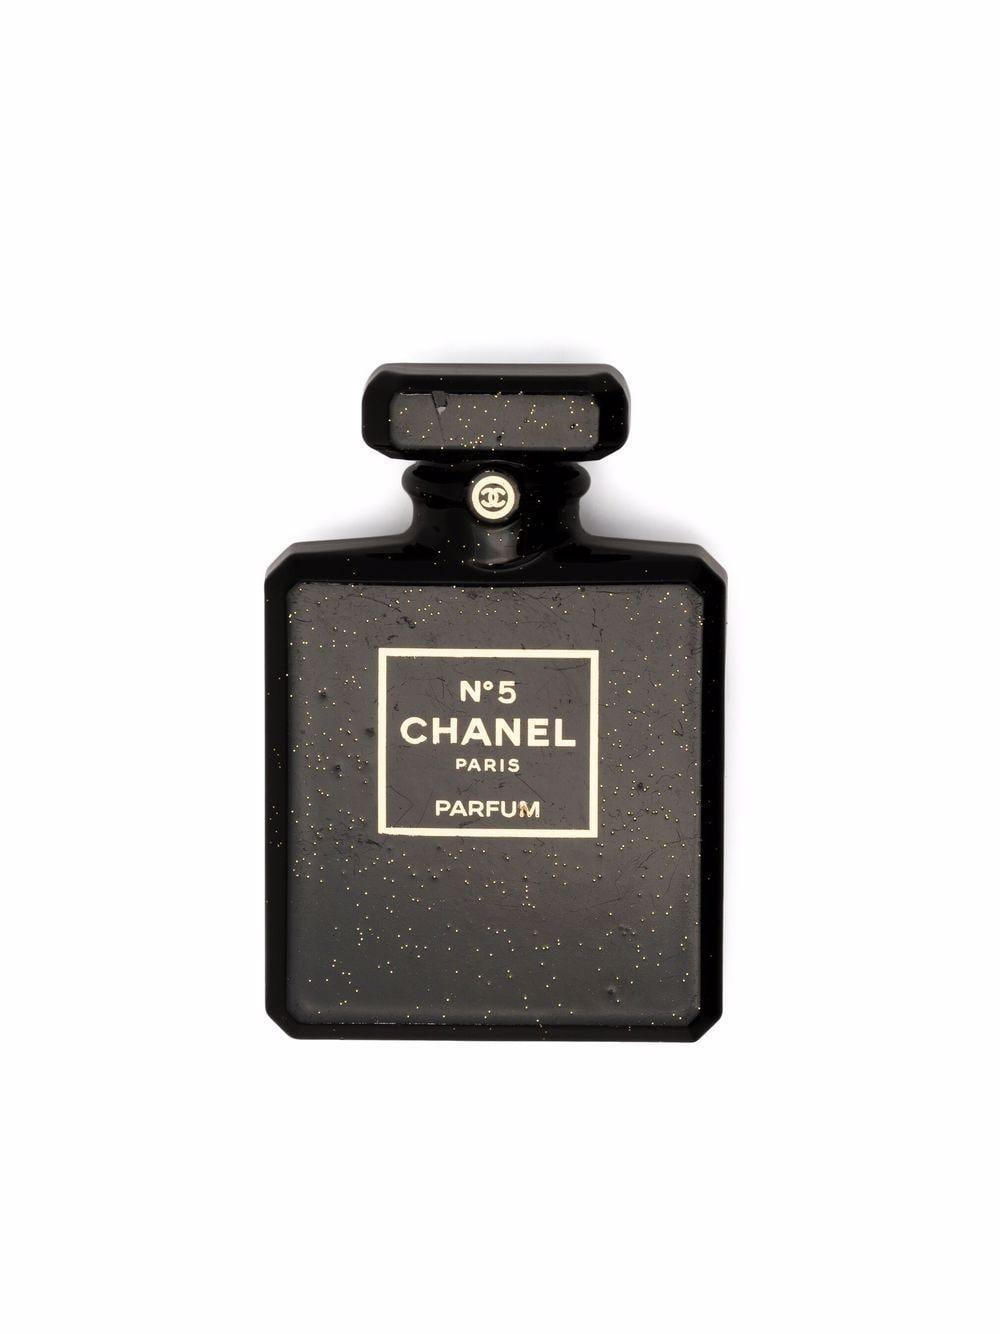 chanel no 5 perfume black bottle